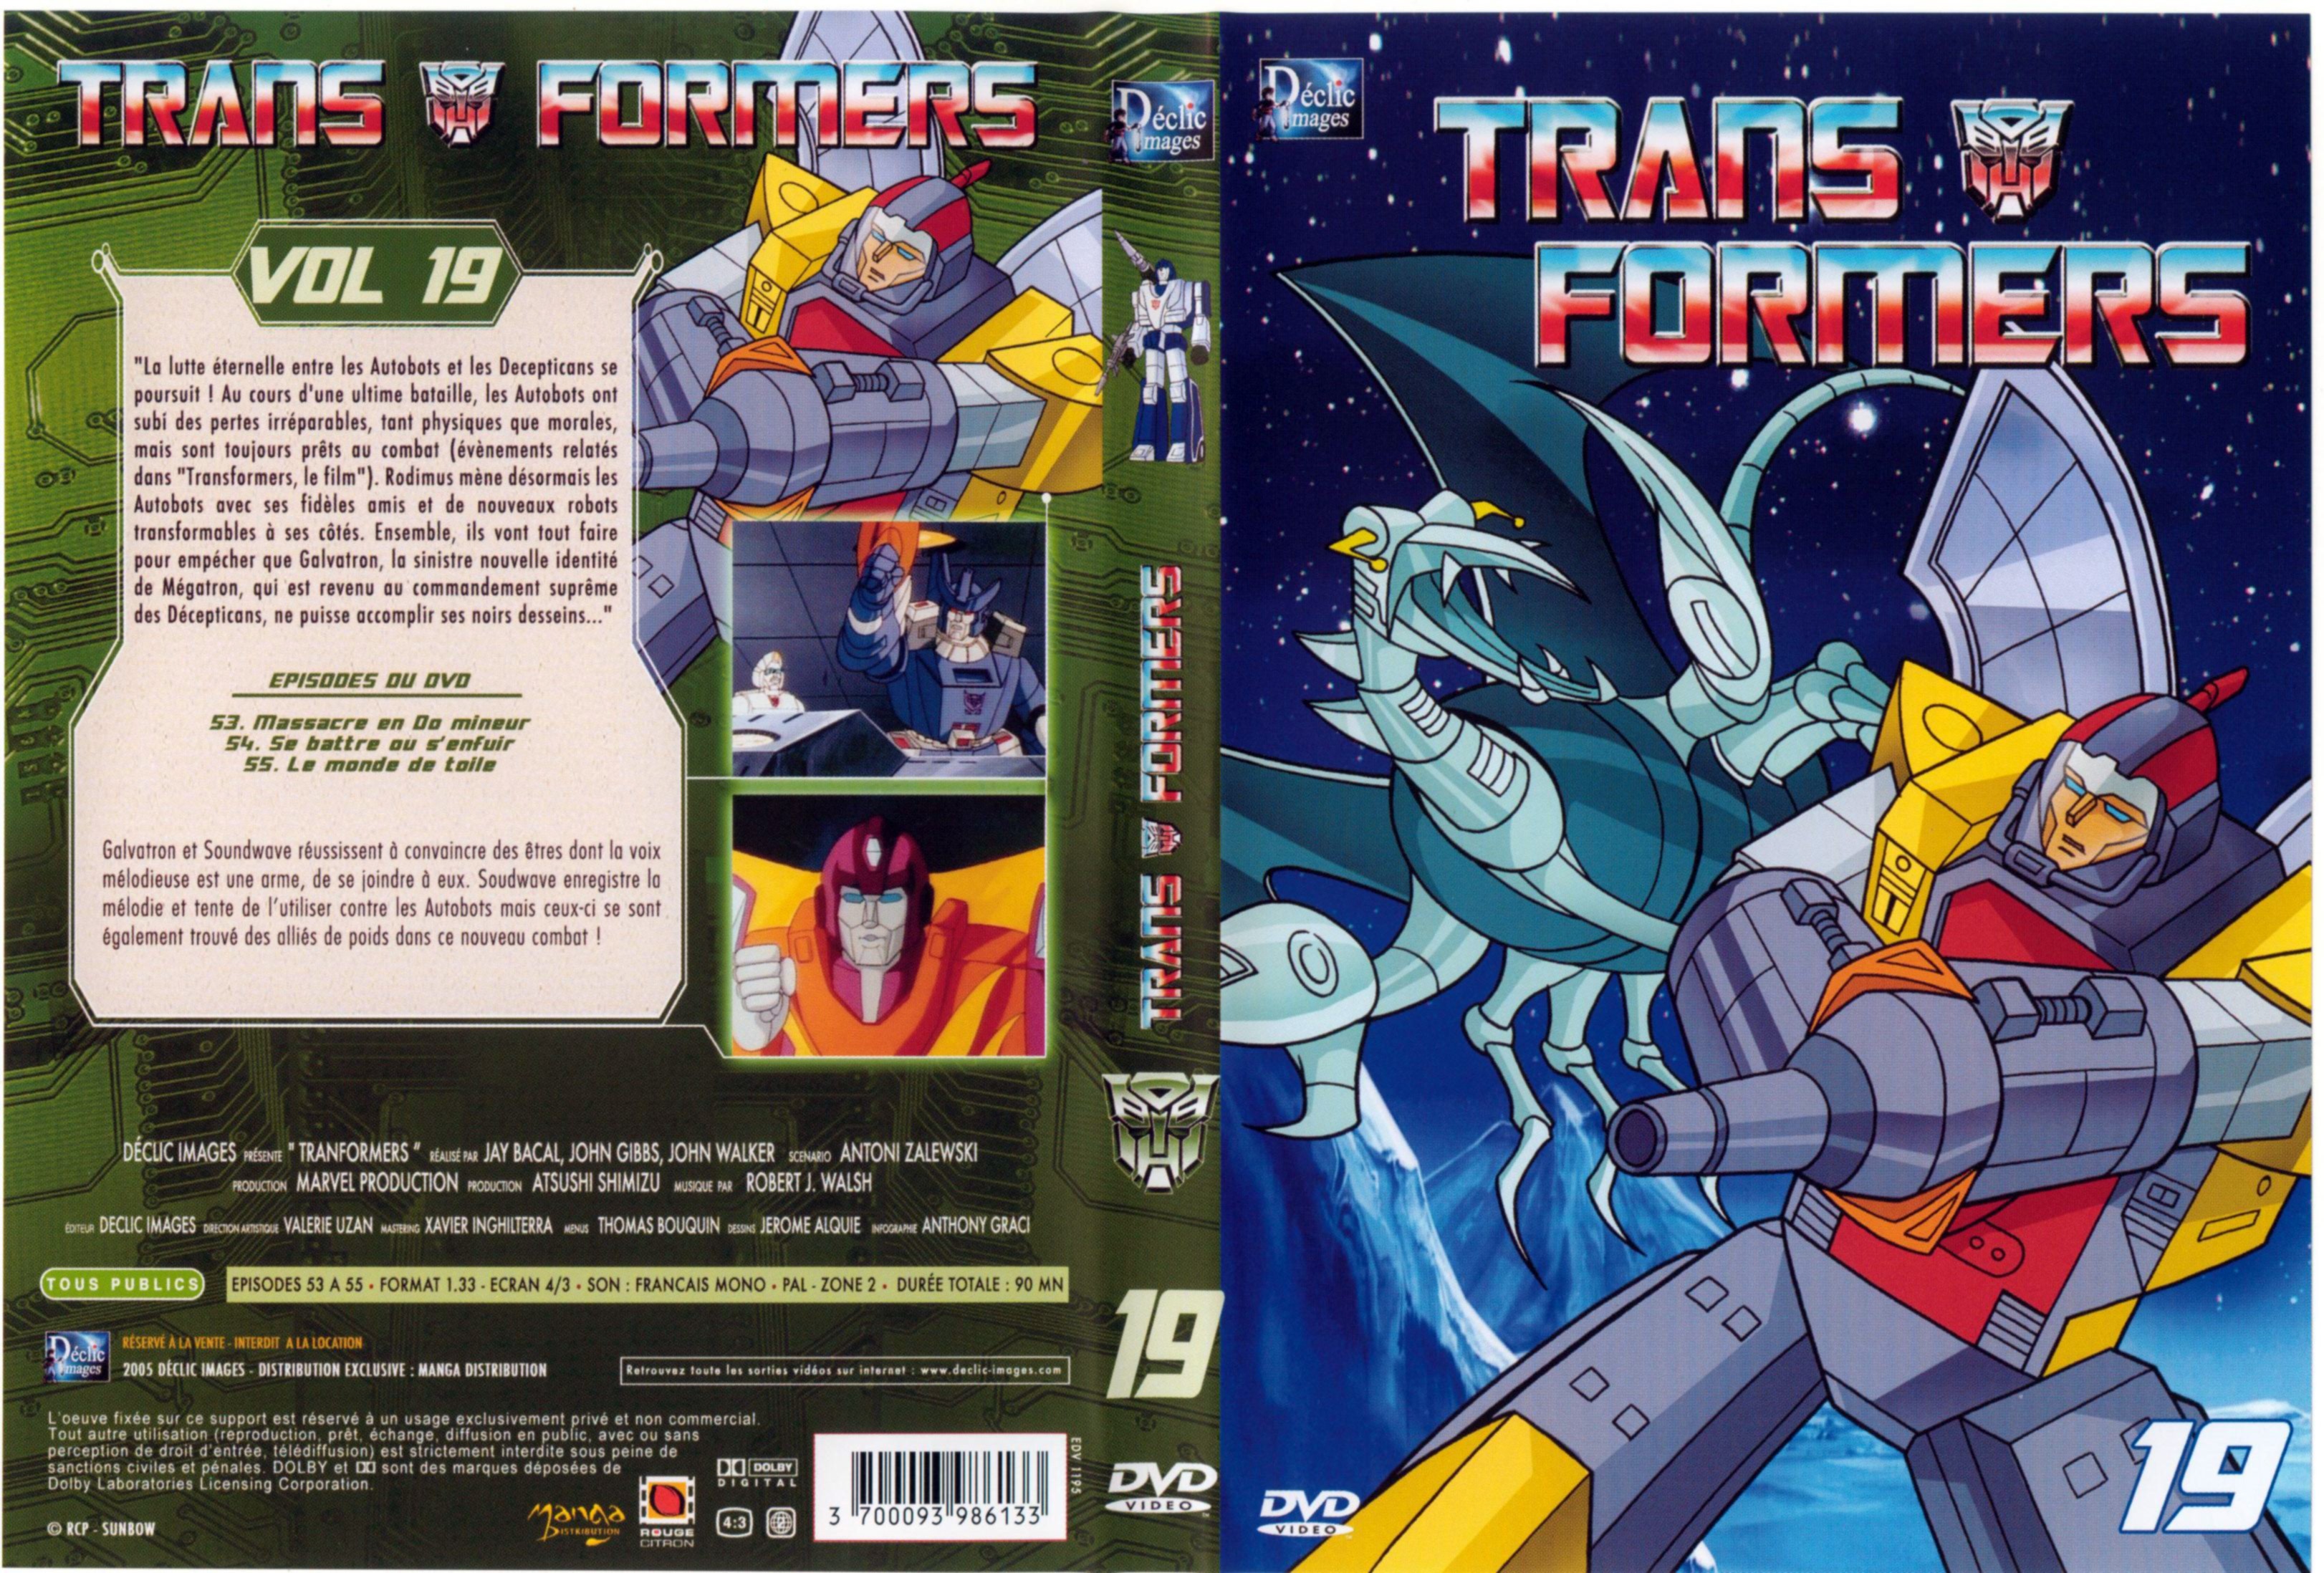 Jaquette DVD Transformers vol 19